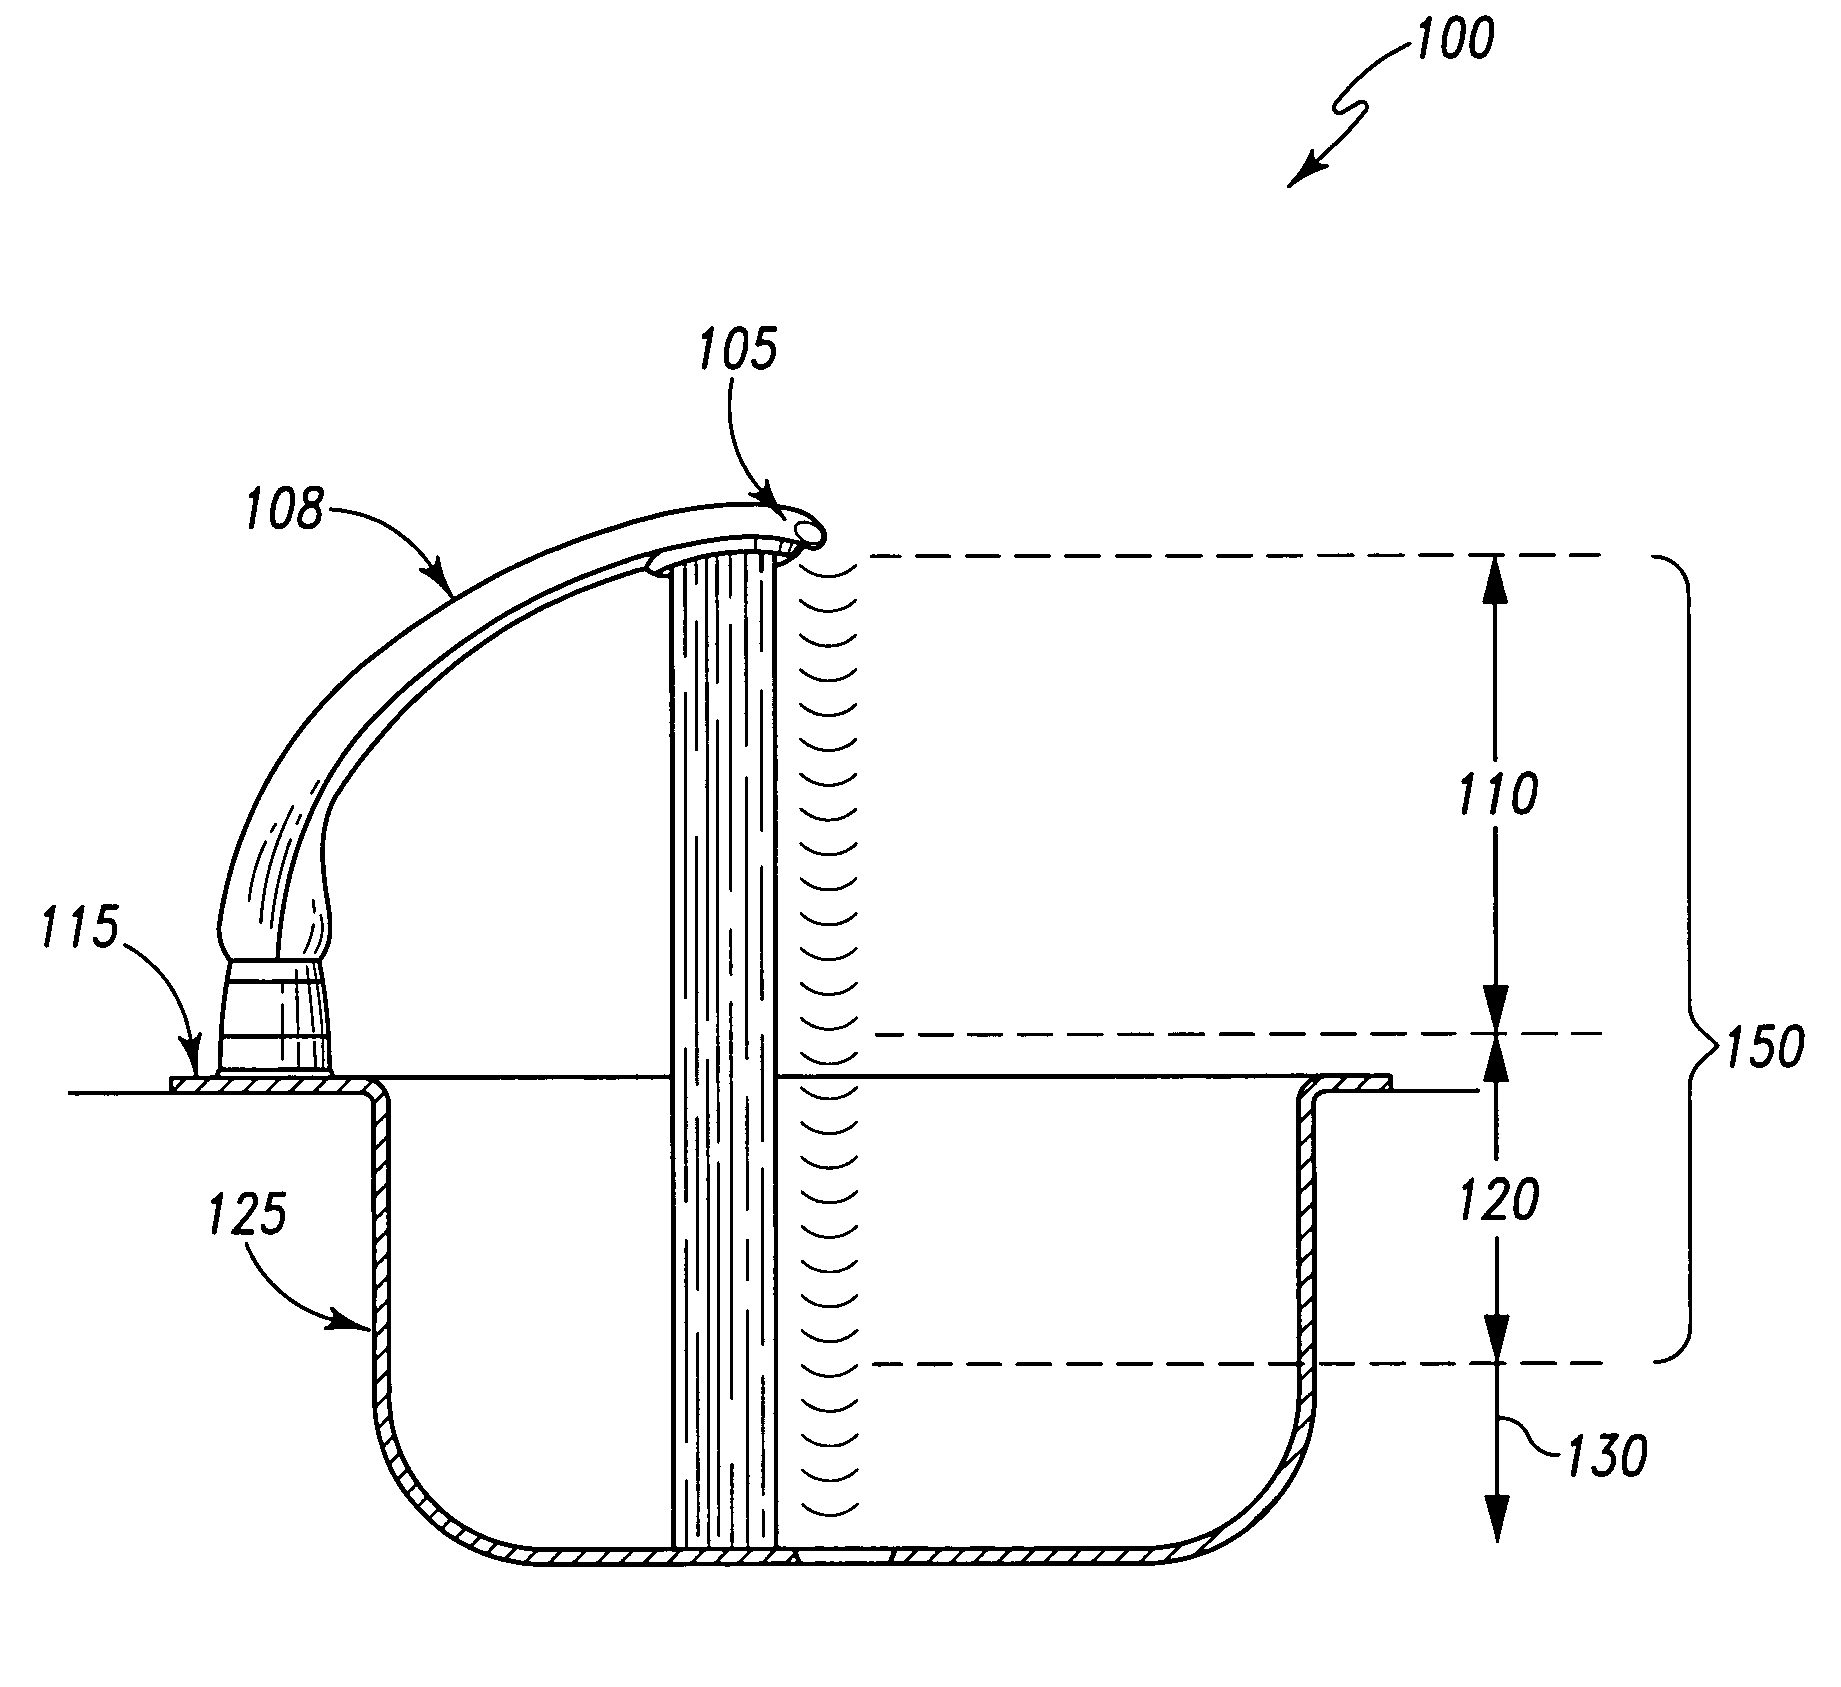 Control arrangement for an automatic residential faucet